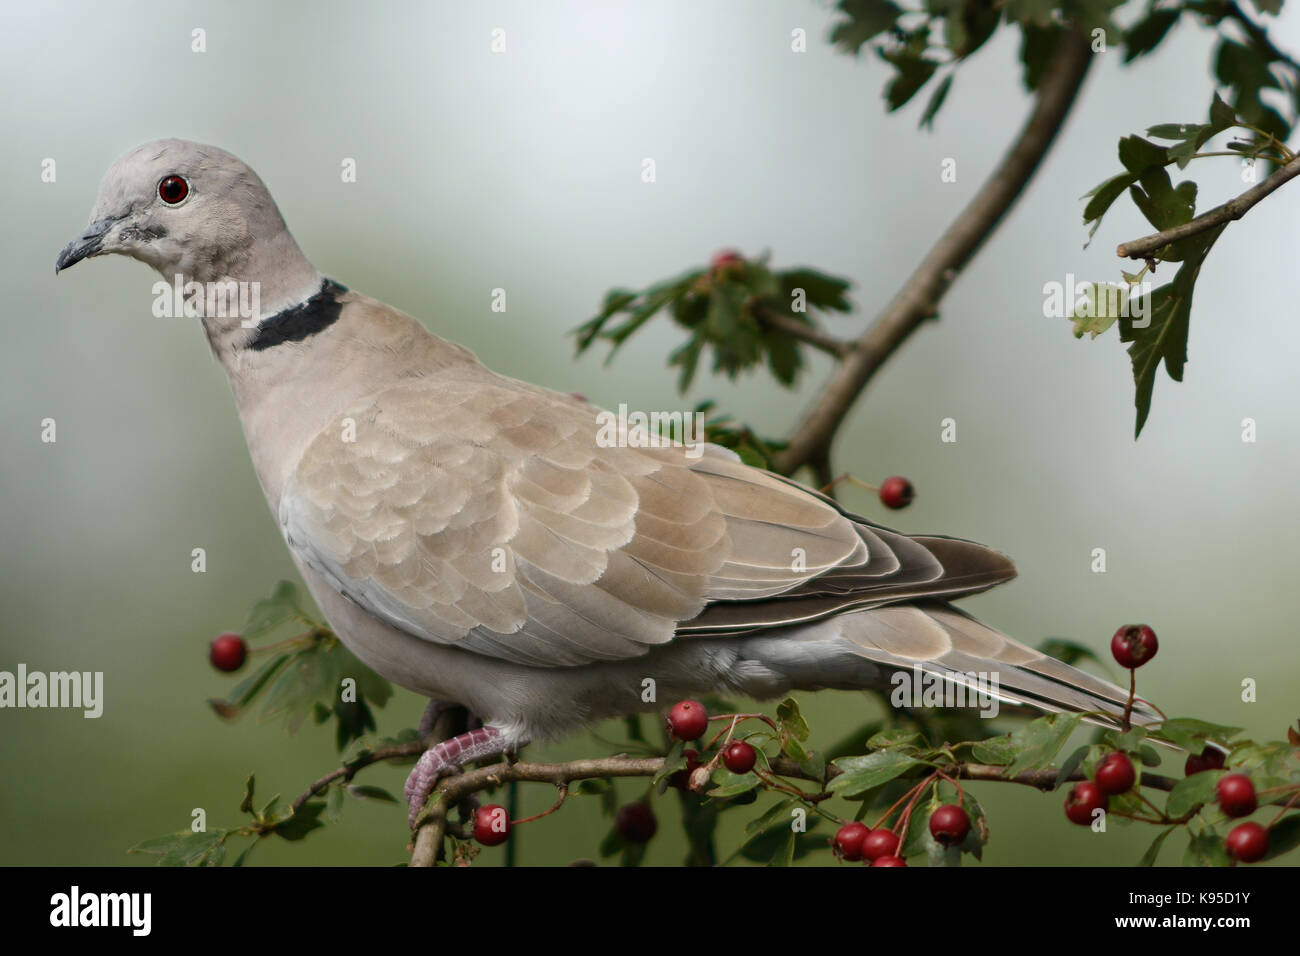 Garden bird - Eurasian collared dove, perched in a hawthorn tree Stock Photo